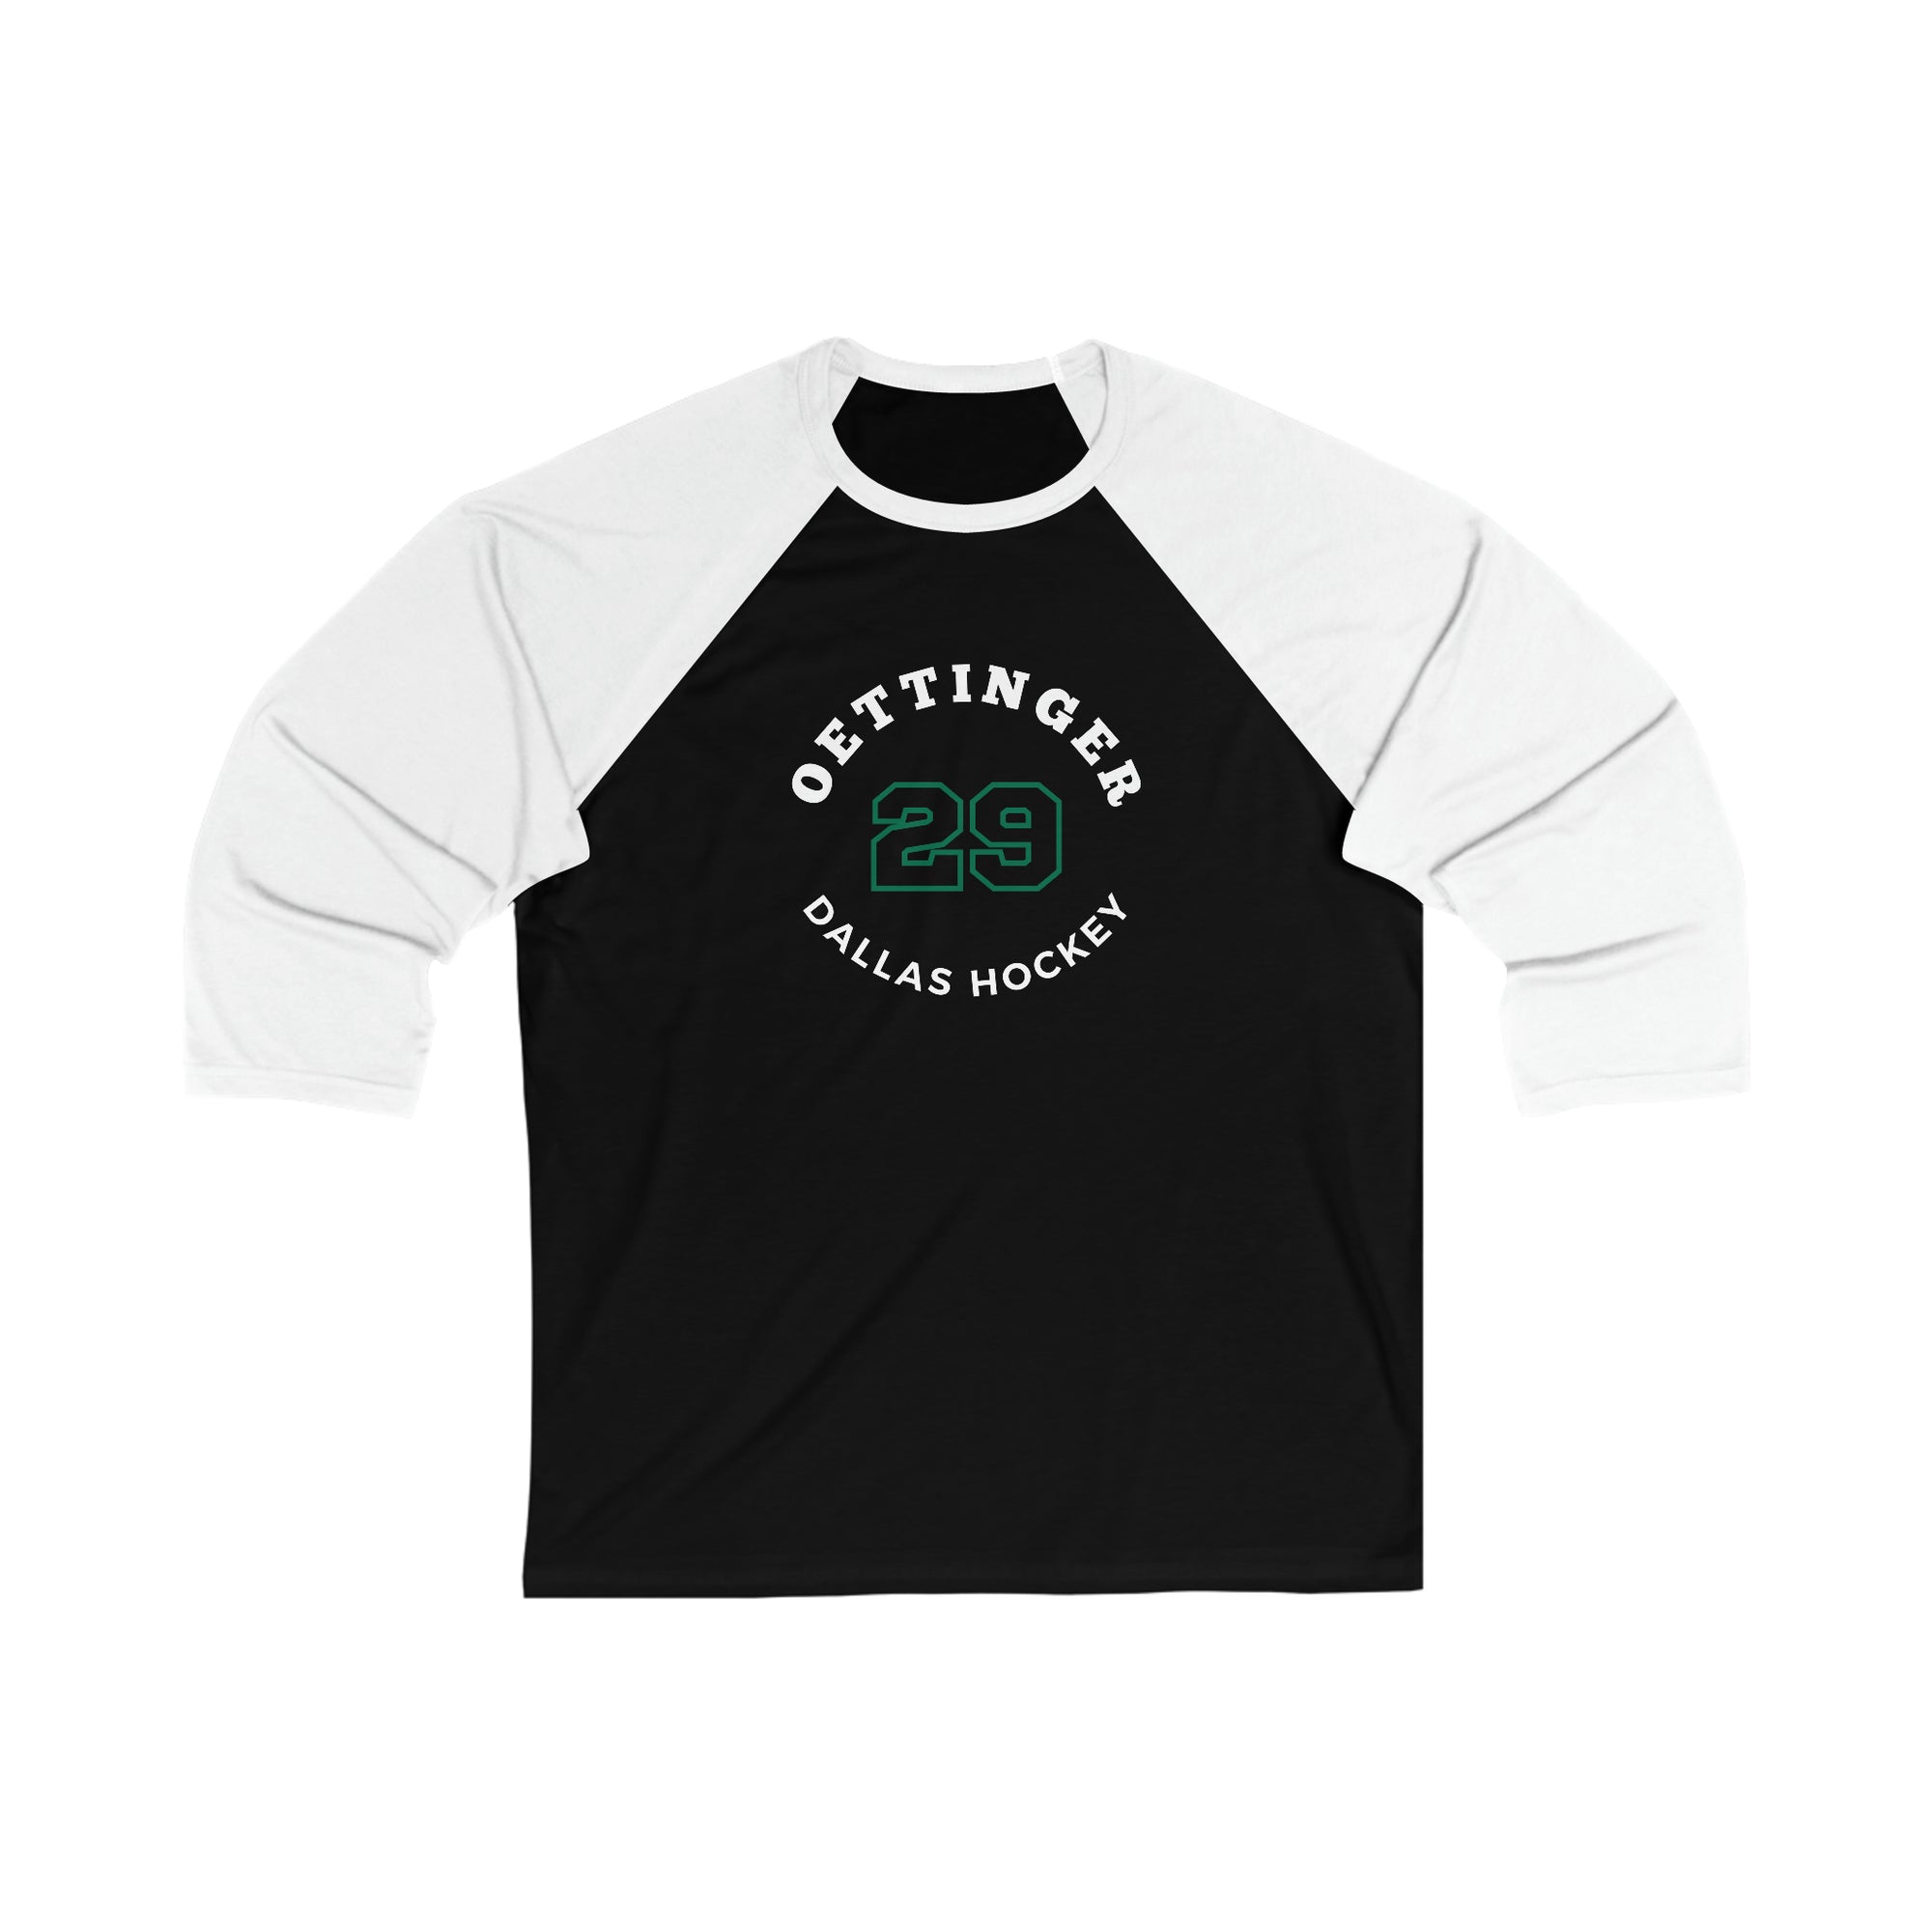 Oettinger 29 Dallas Hockey Number Arch Design Unisex Tri-Blend 3/4 Sleeve Raglan Baseball Shirt